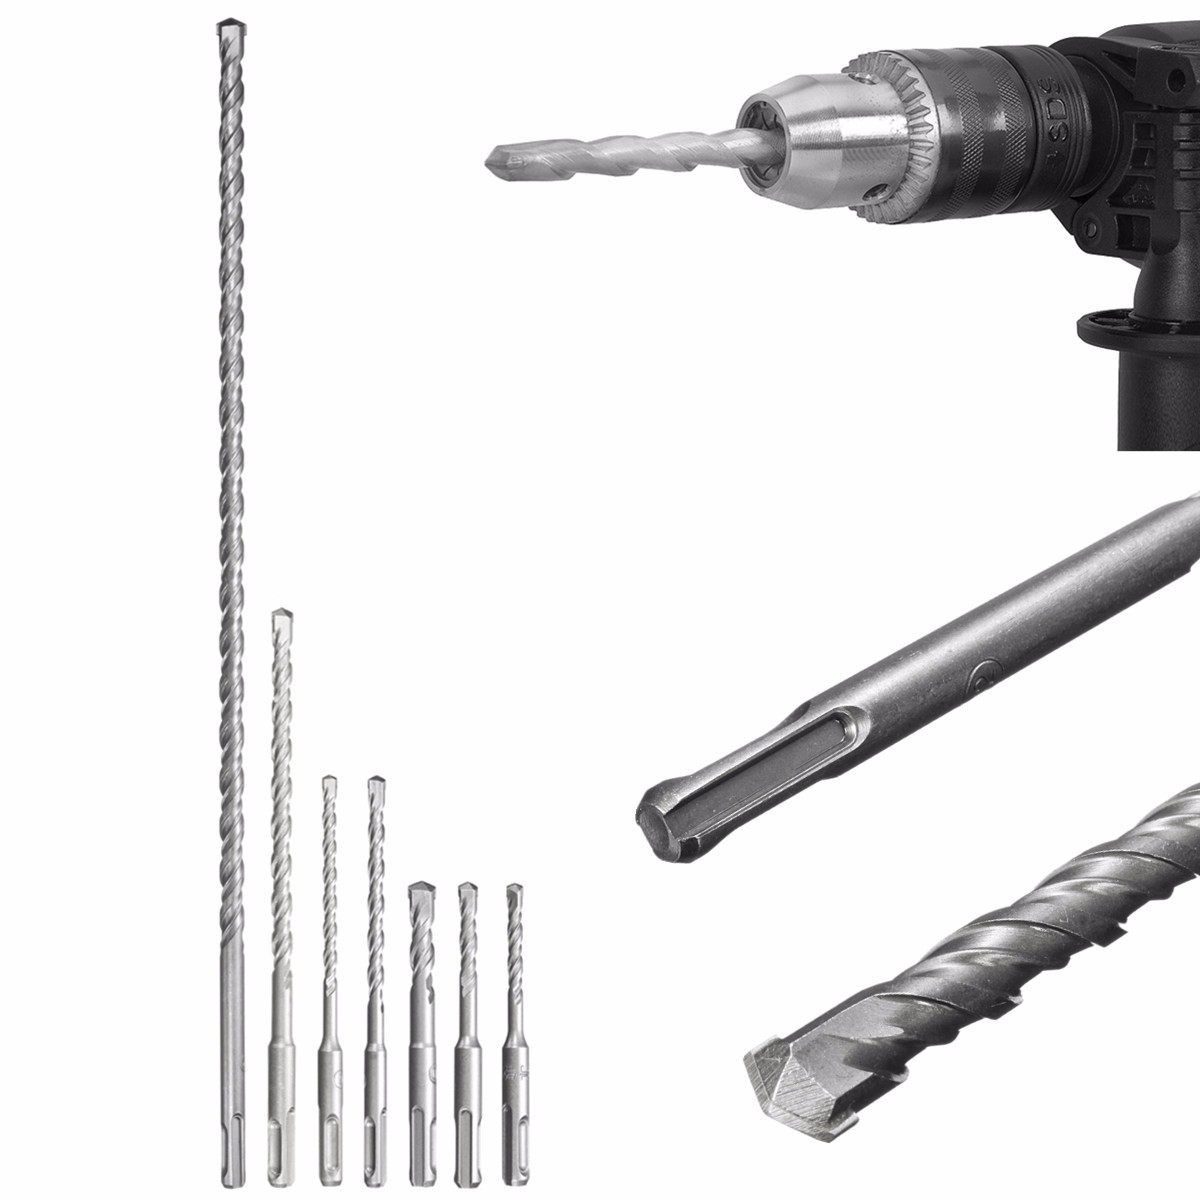 

7pcs 6-12mm SDS Plus Shank Electric Hammer Drill Bit Set Carbide Tip Masonry Concrete Brick Drill Bit